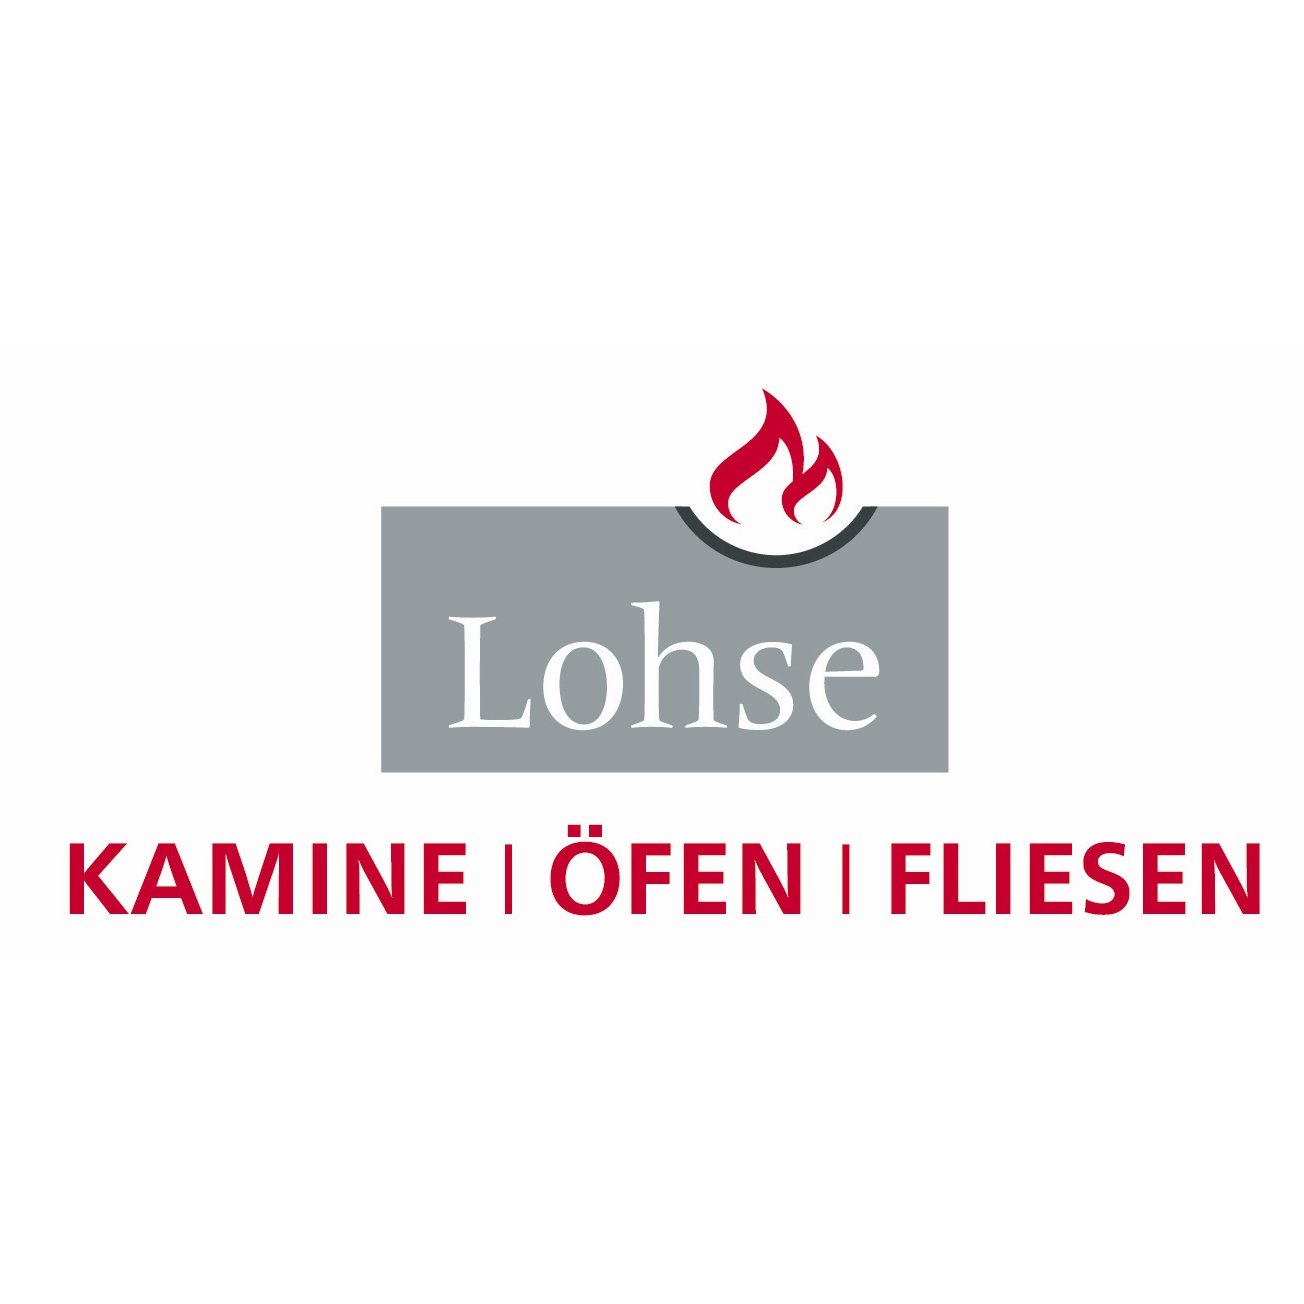 Lohse Kamine-Öfen-Fliesen Inh. Andreas Wache  